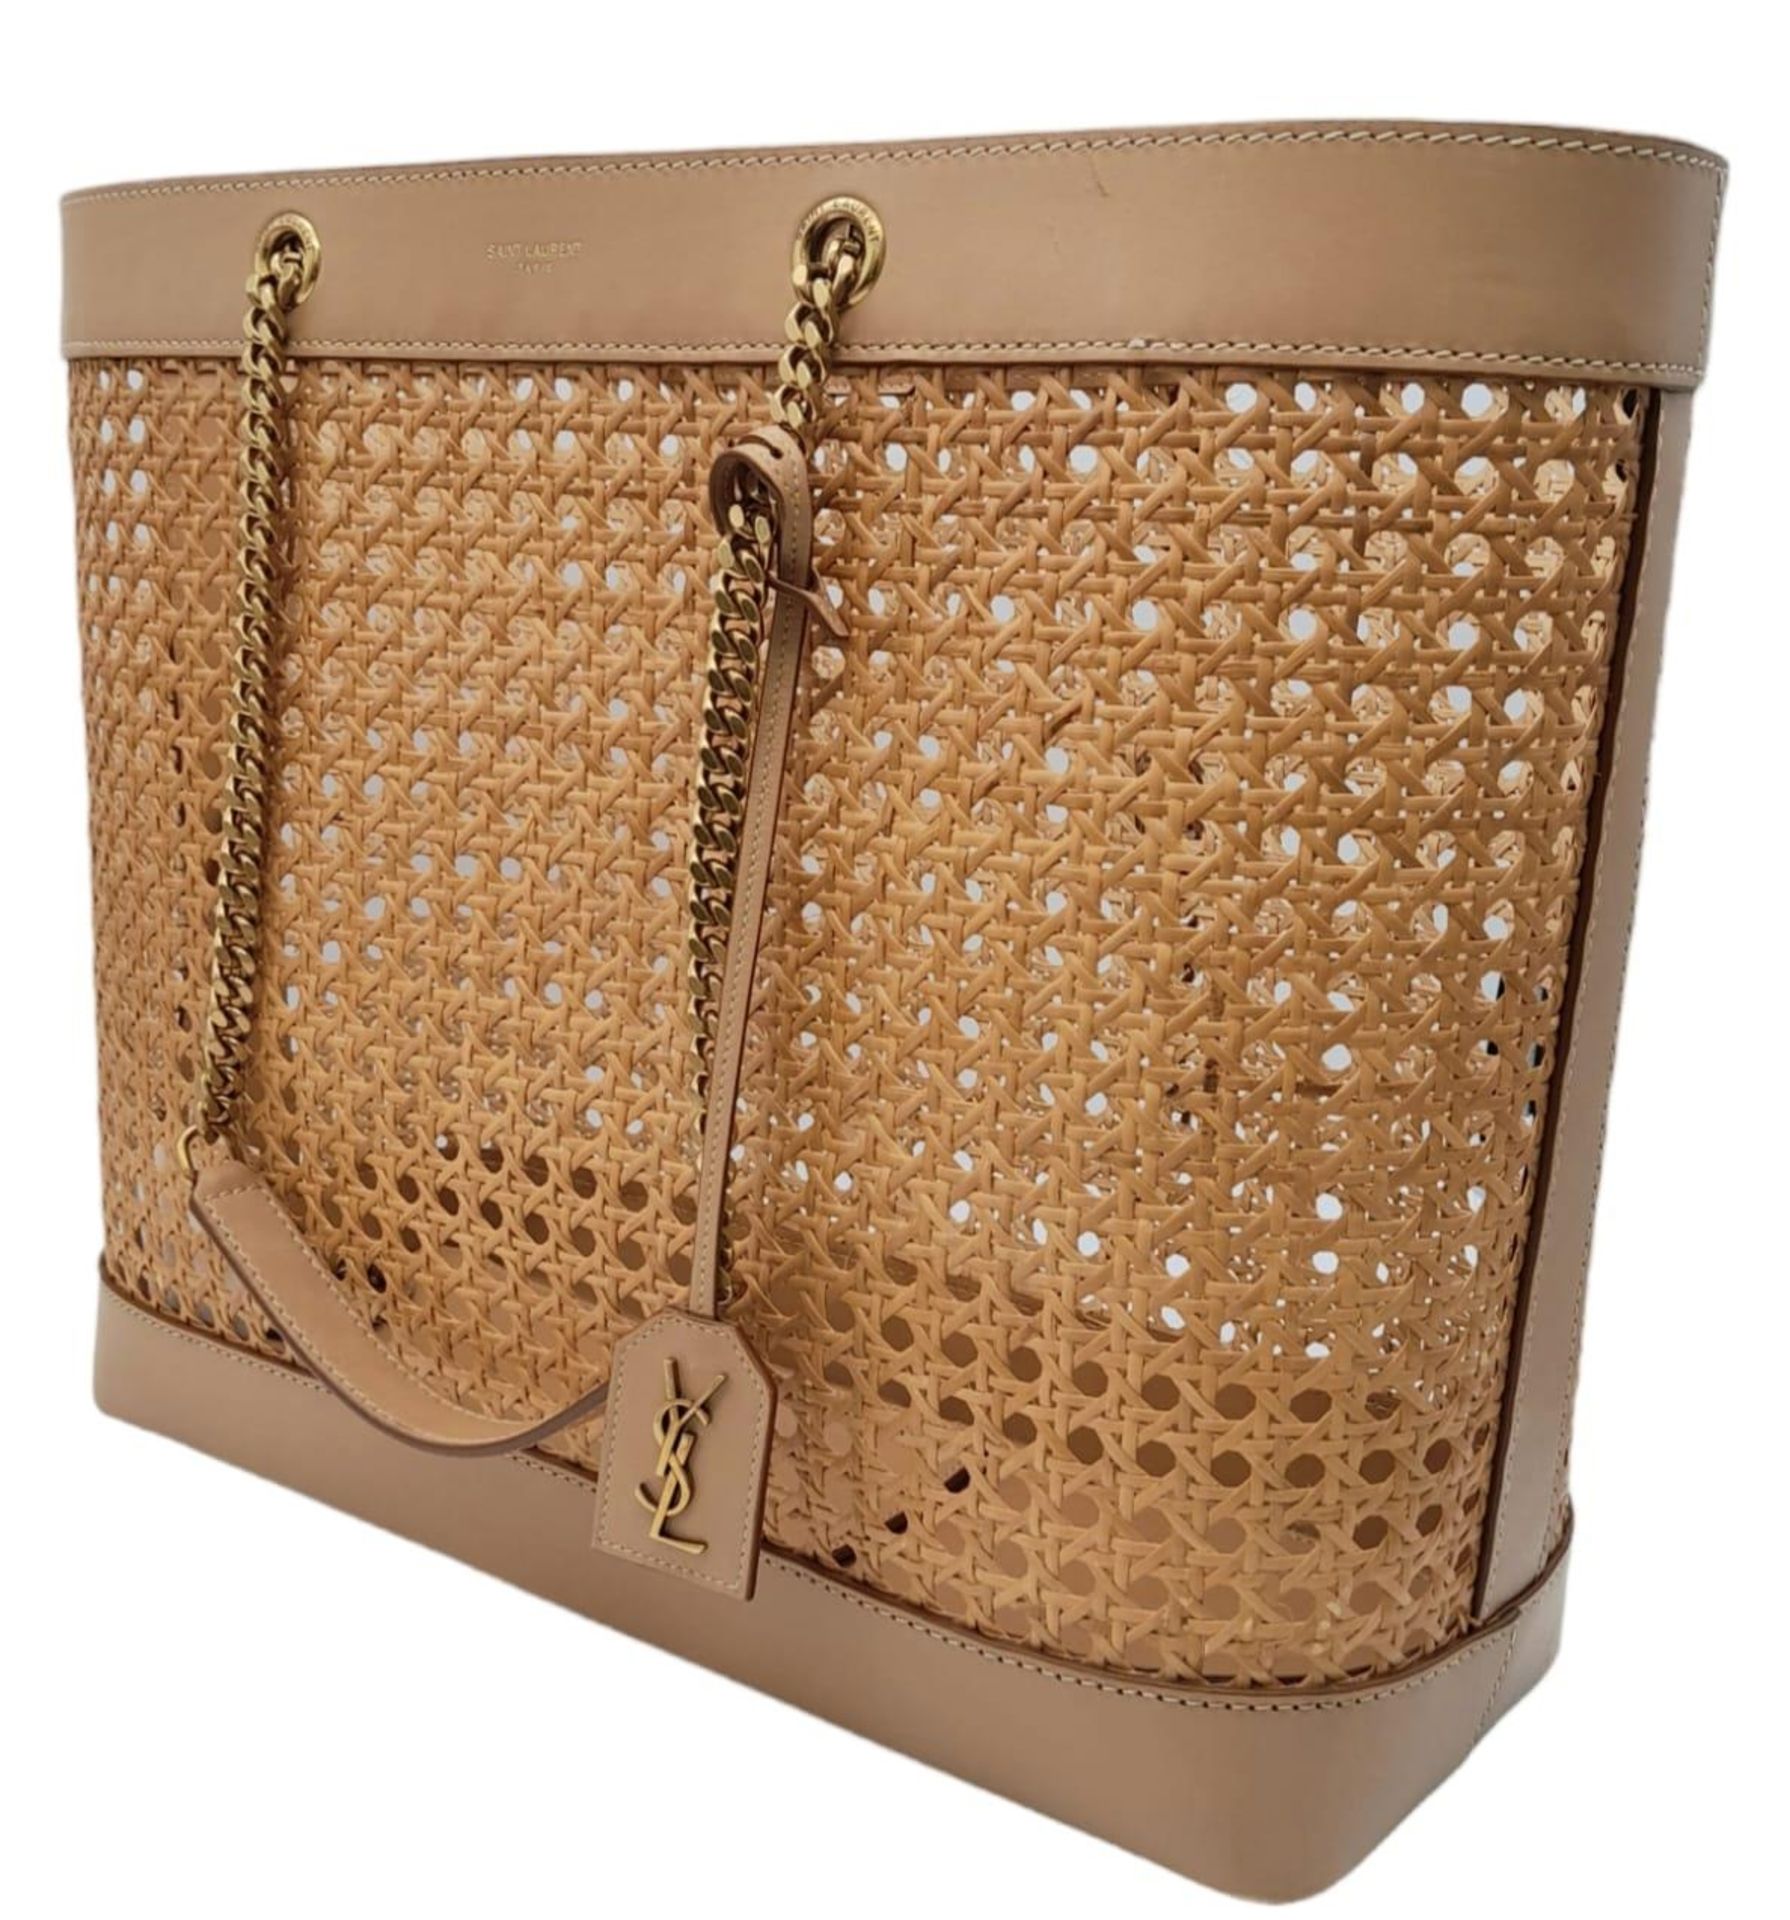 A Saint Laurent Beige Tote Bag. Woven rattan and leather trim exterior. Magnetic closure, gold-toned - Bild 2 aus 12